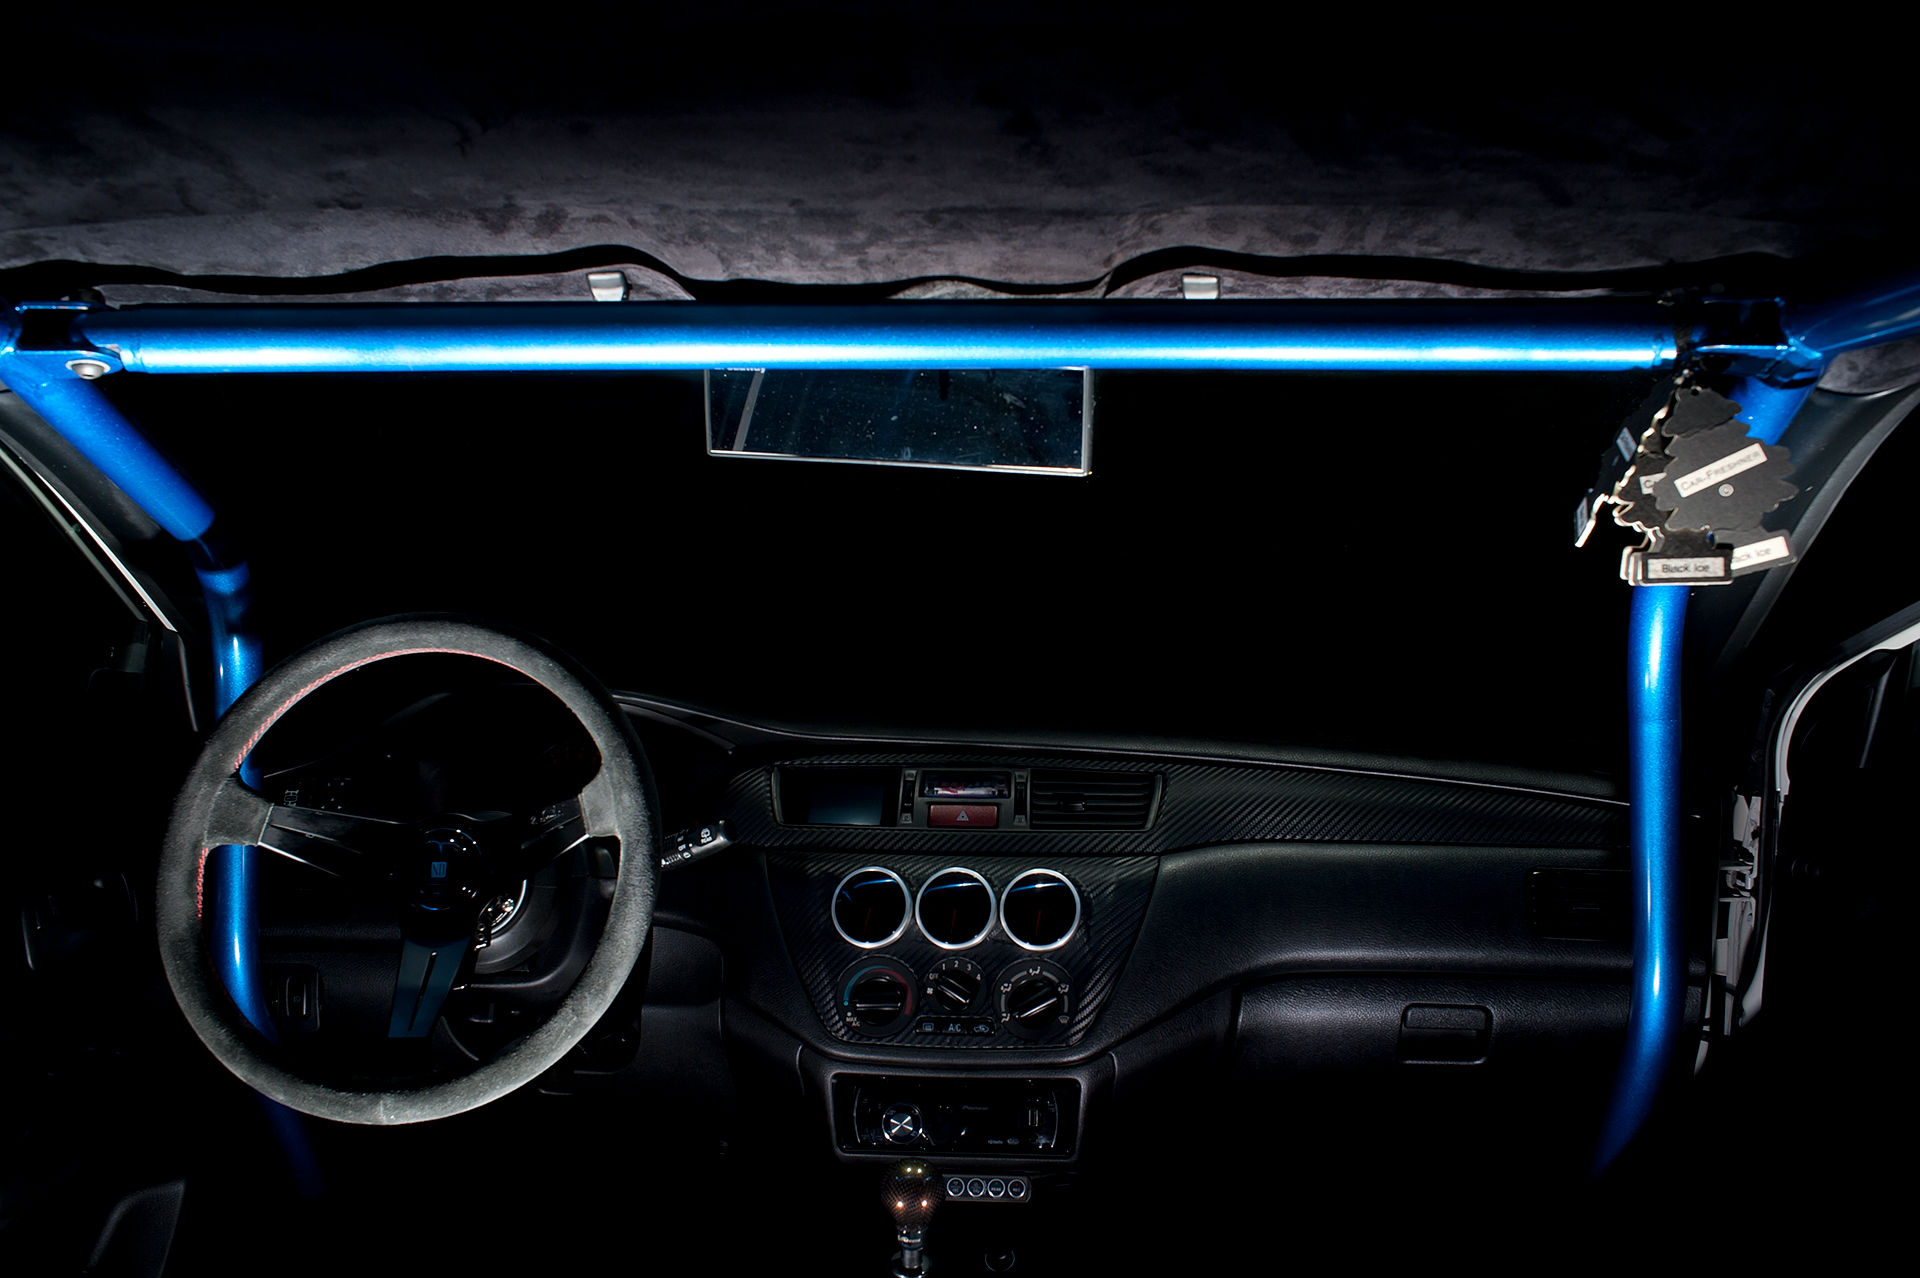 Interior shot of White Mitsubishi Evo IX with Varis body kit